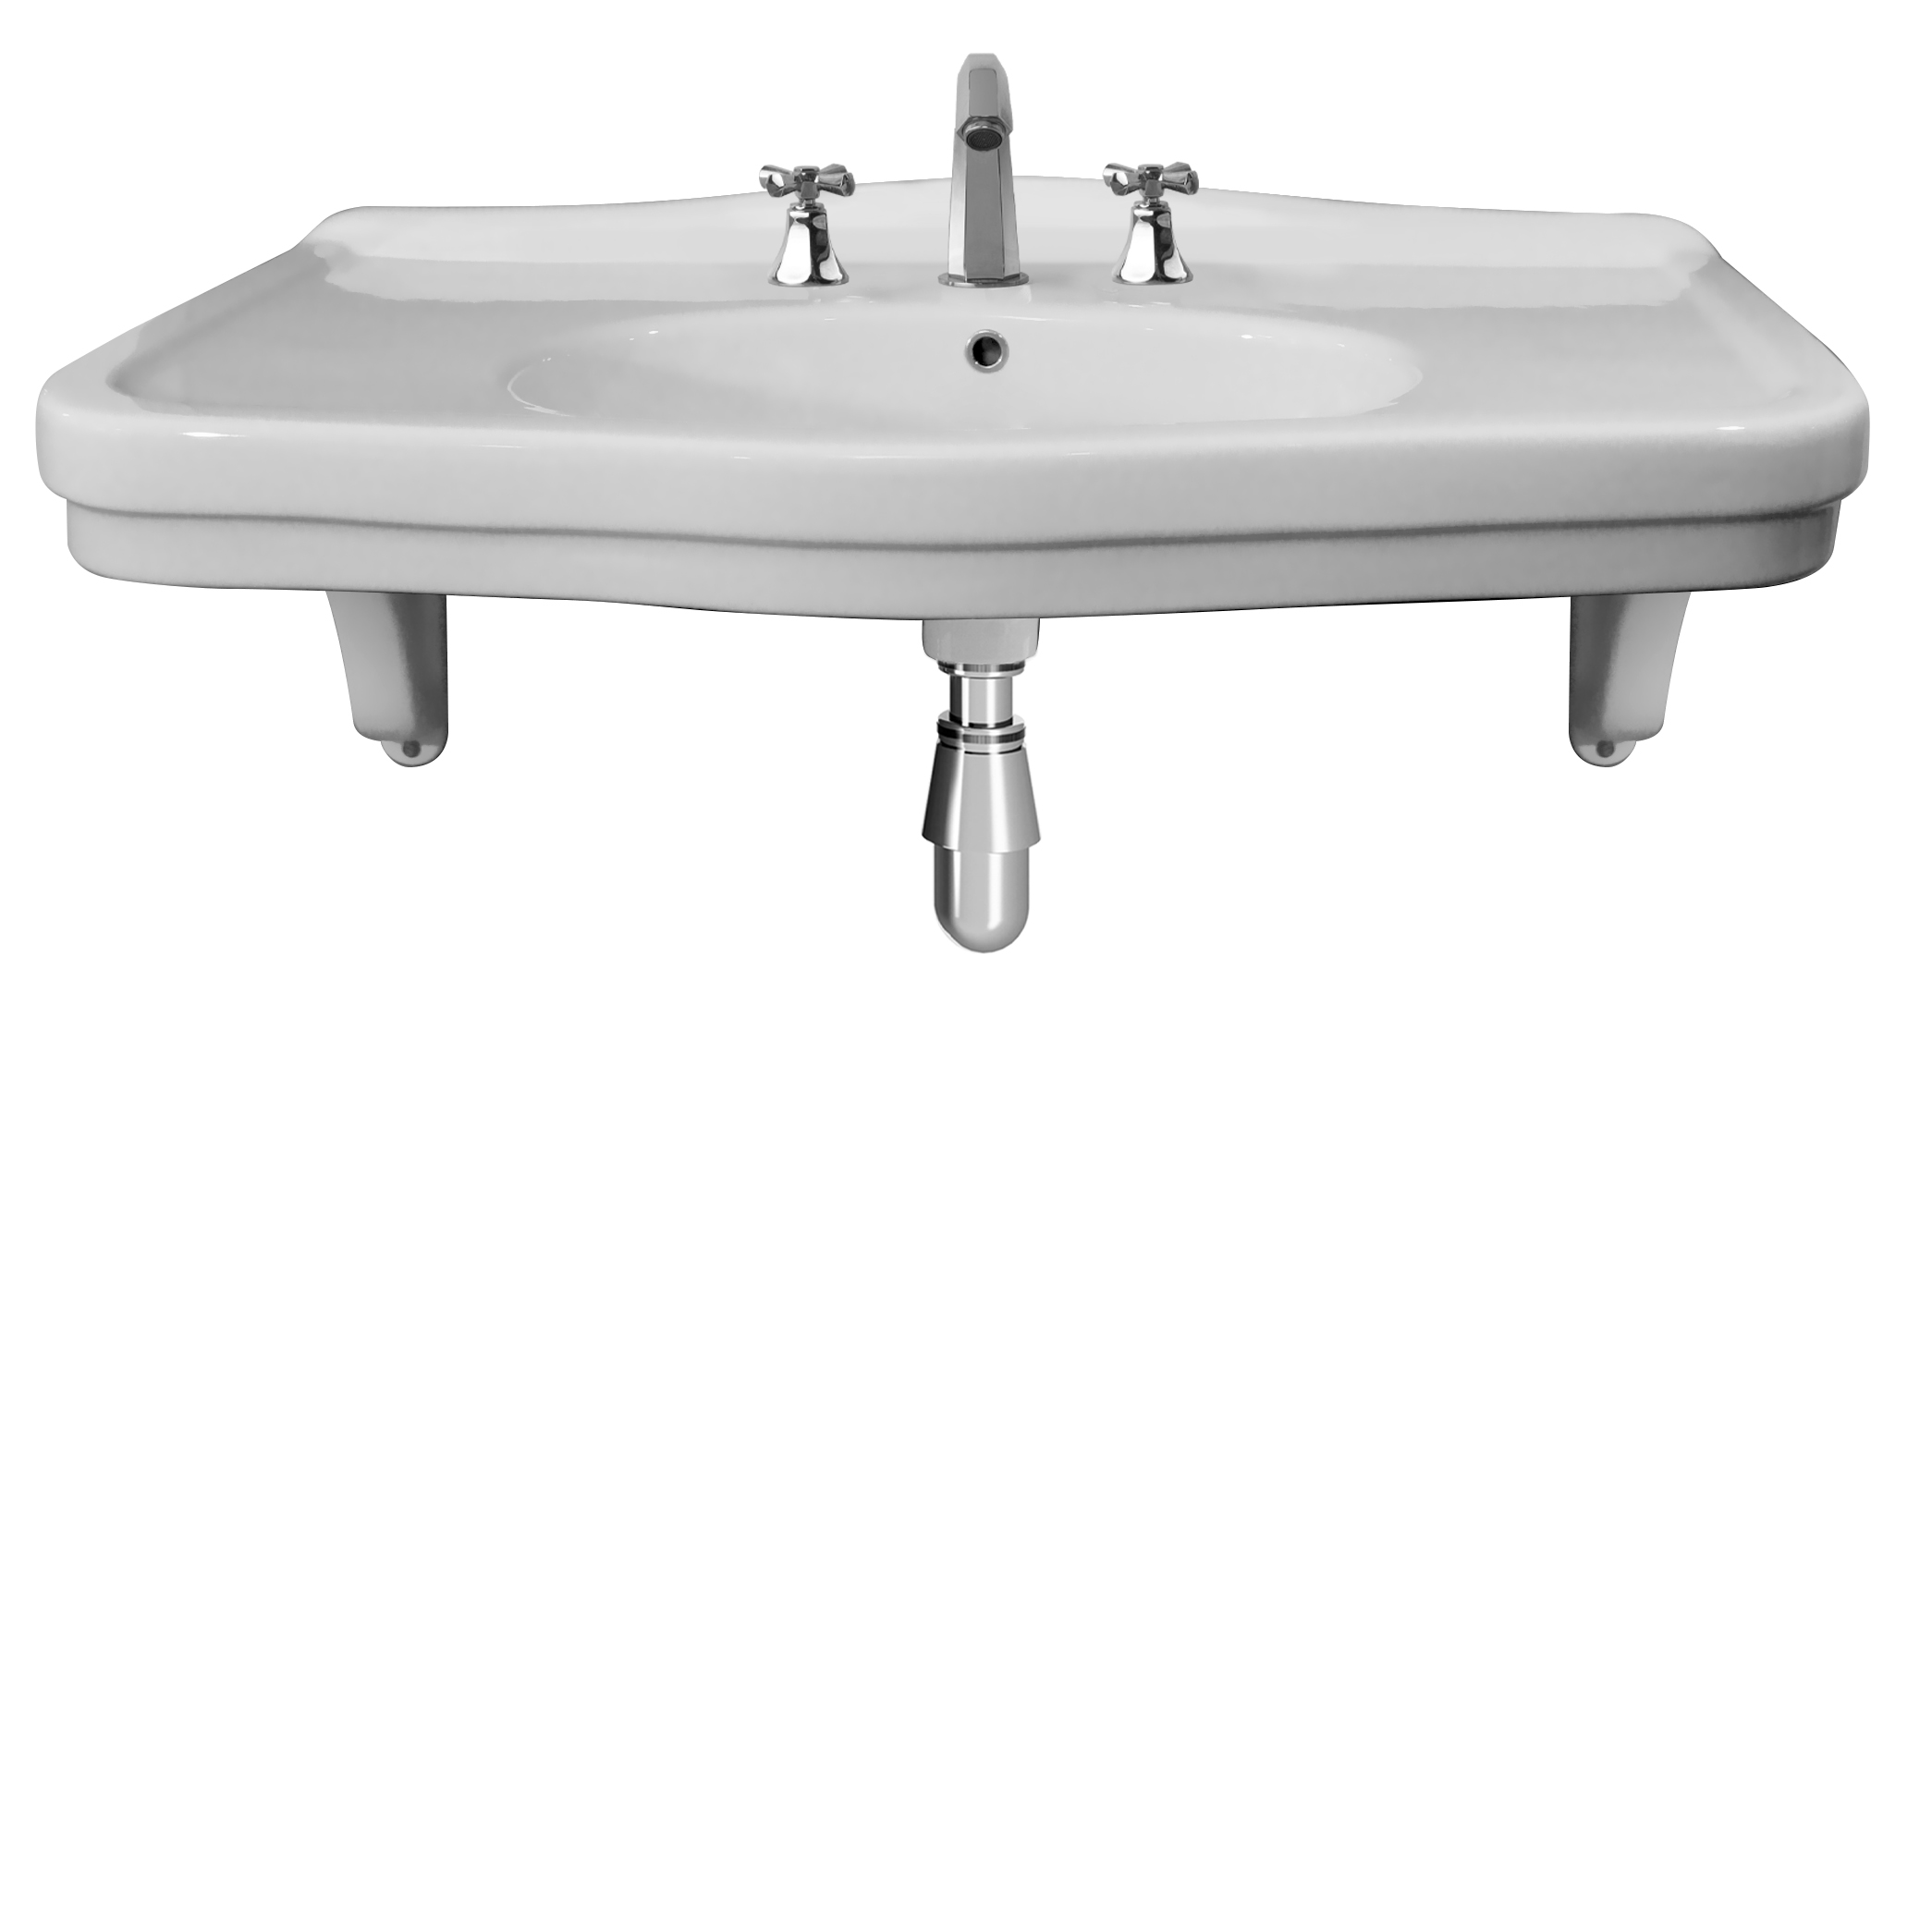 MS06-105-equerres-ceramique Le Touquet washbasin on ceramic brackets, L. 105cm